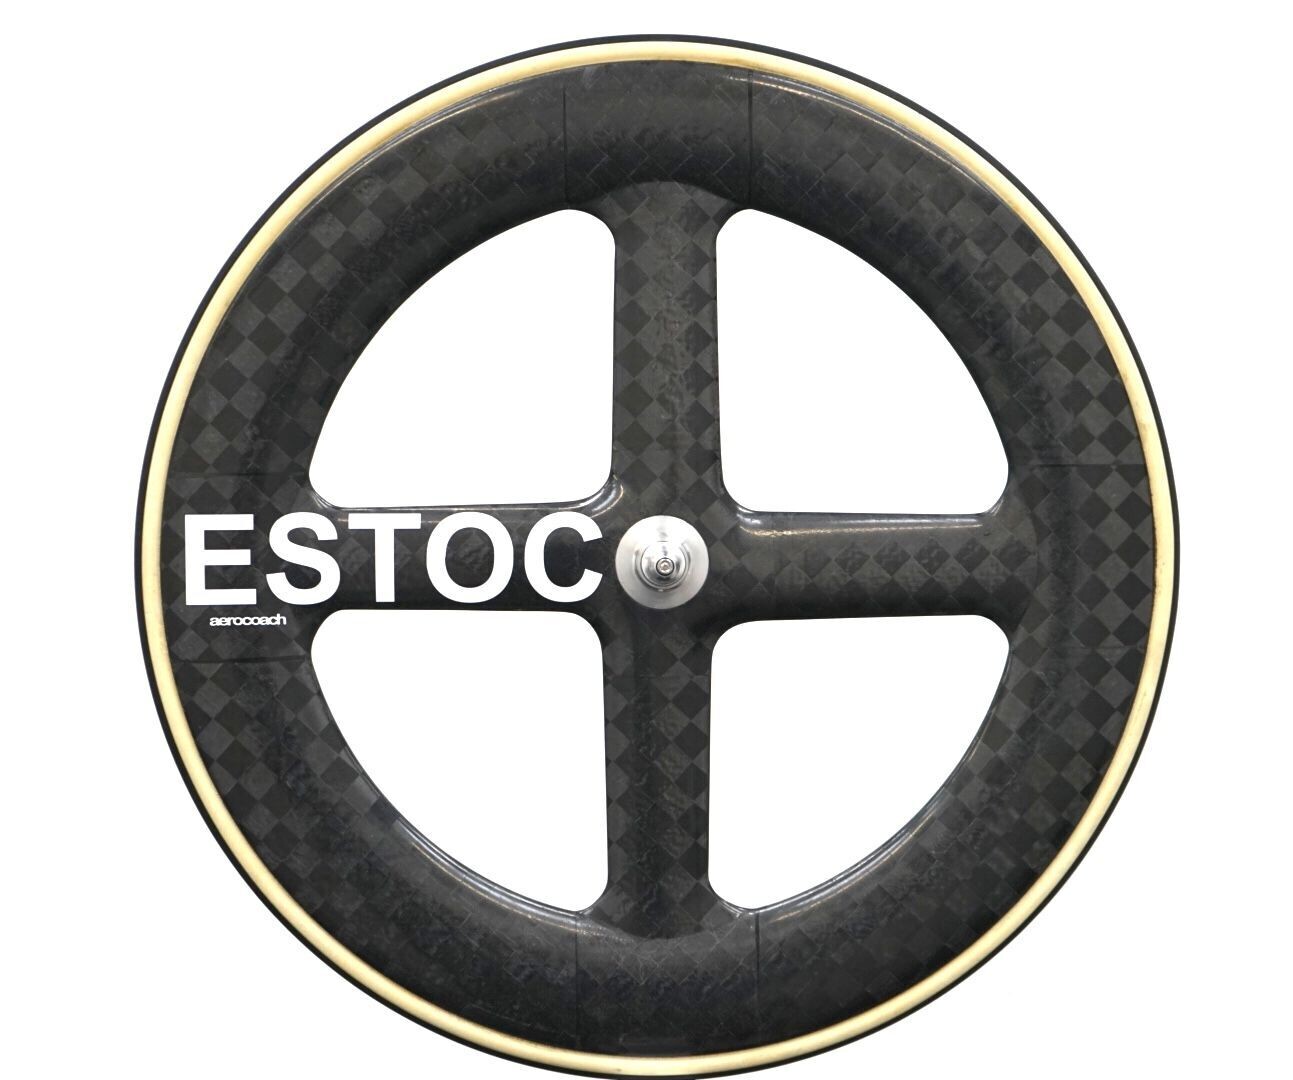 AeroCoach AEOX® ESTOC carbon track 4 spoke wheel